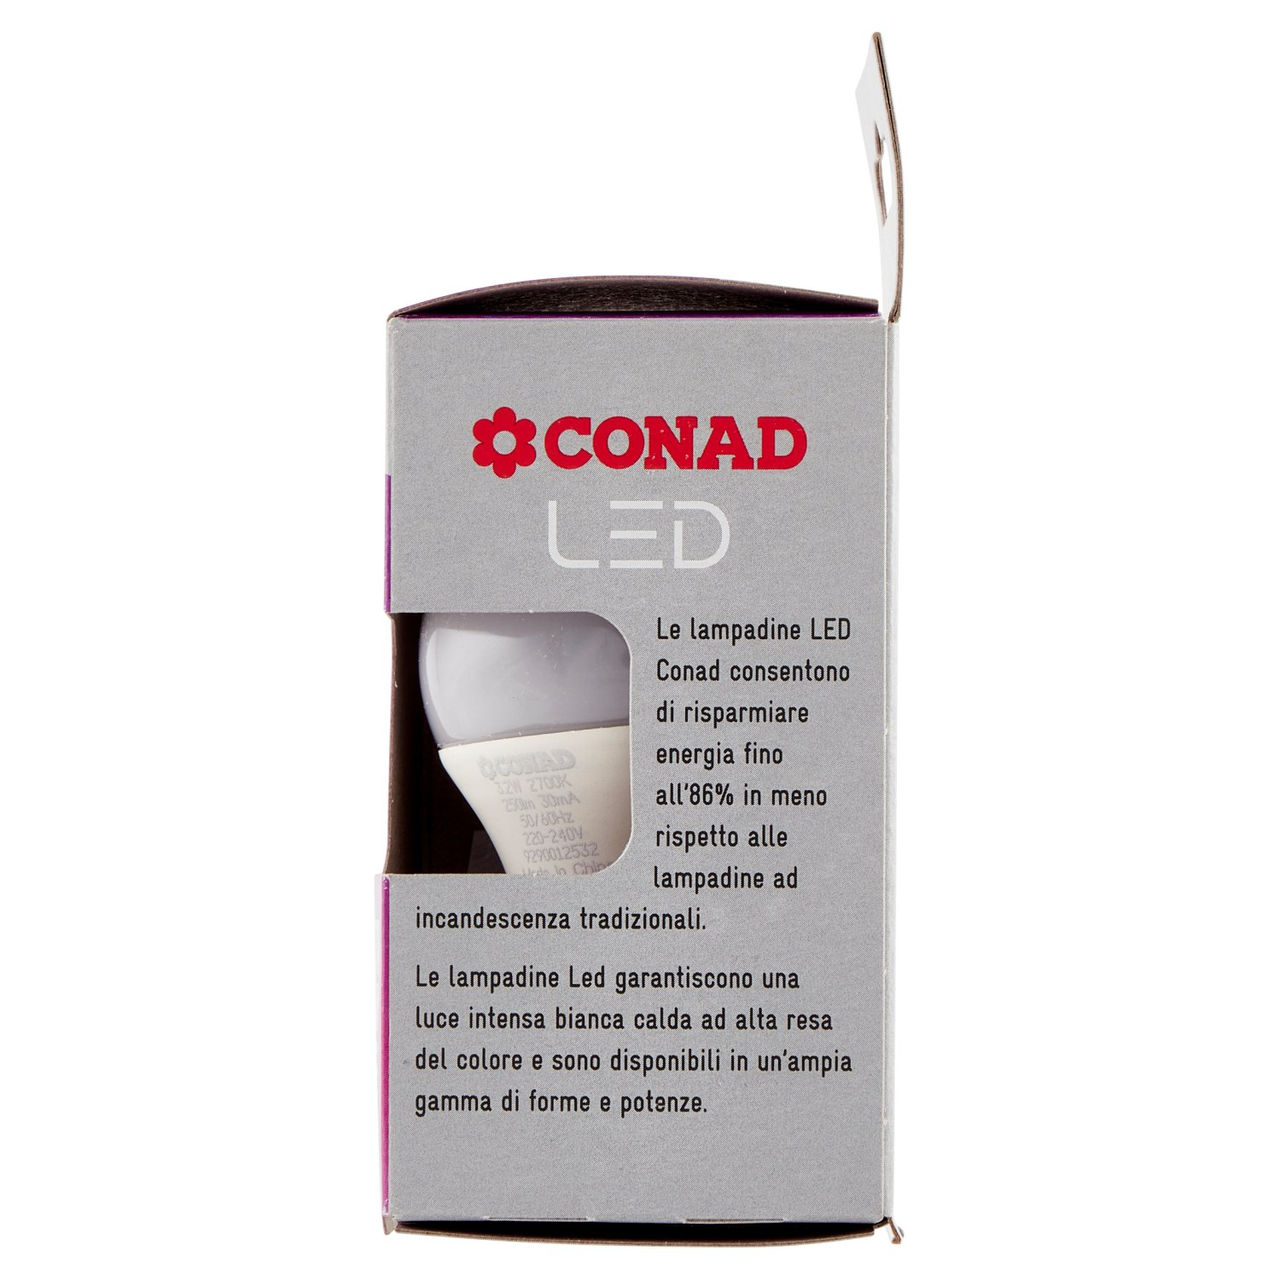 CONAD Led 3.2W 250 Lumen E14 Luce Calda